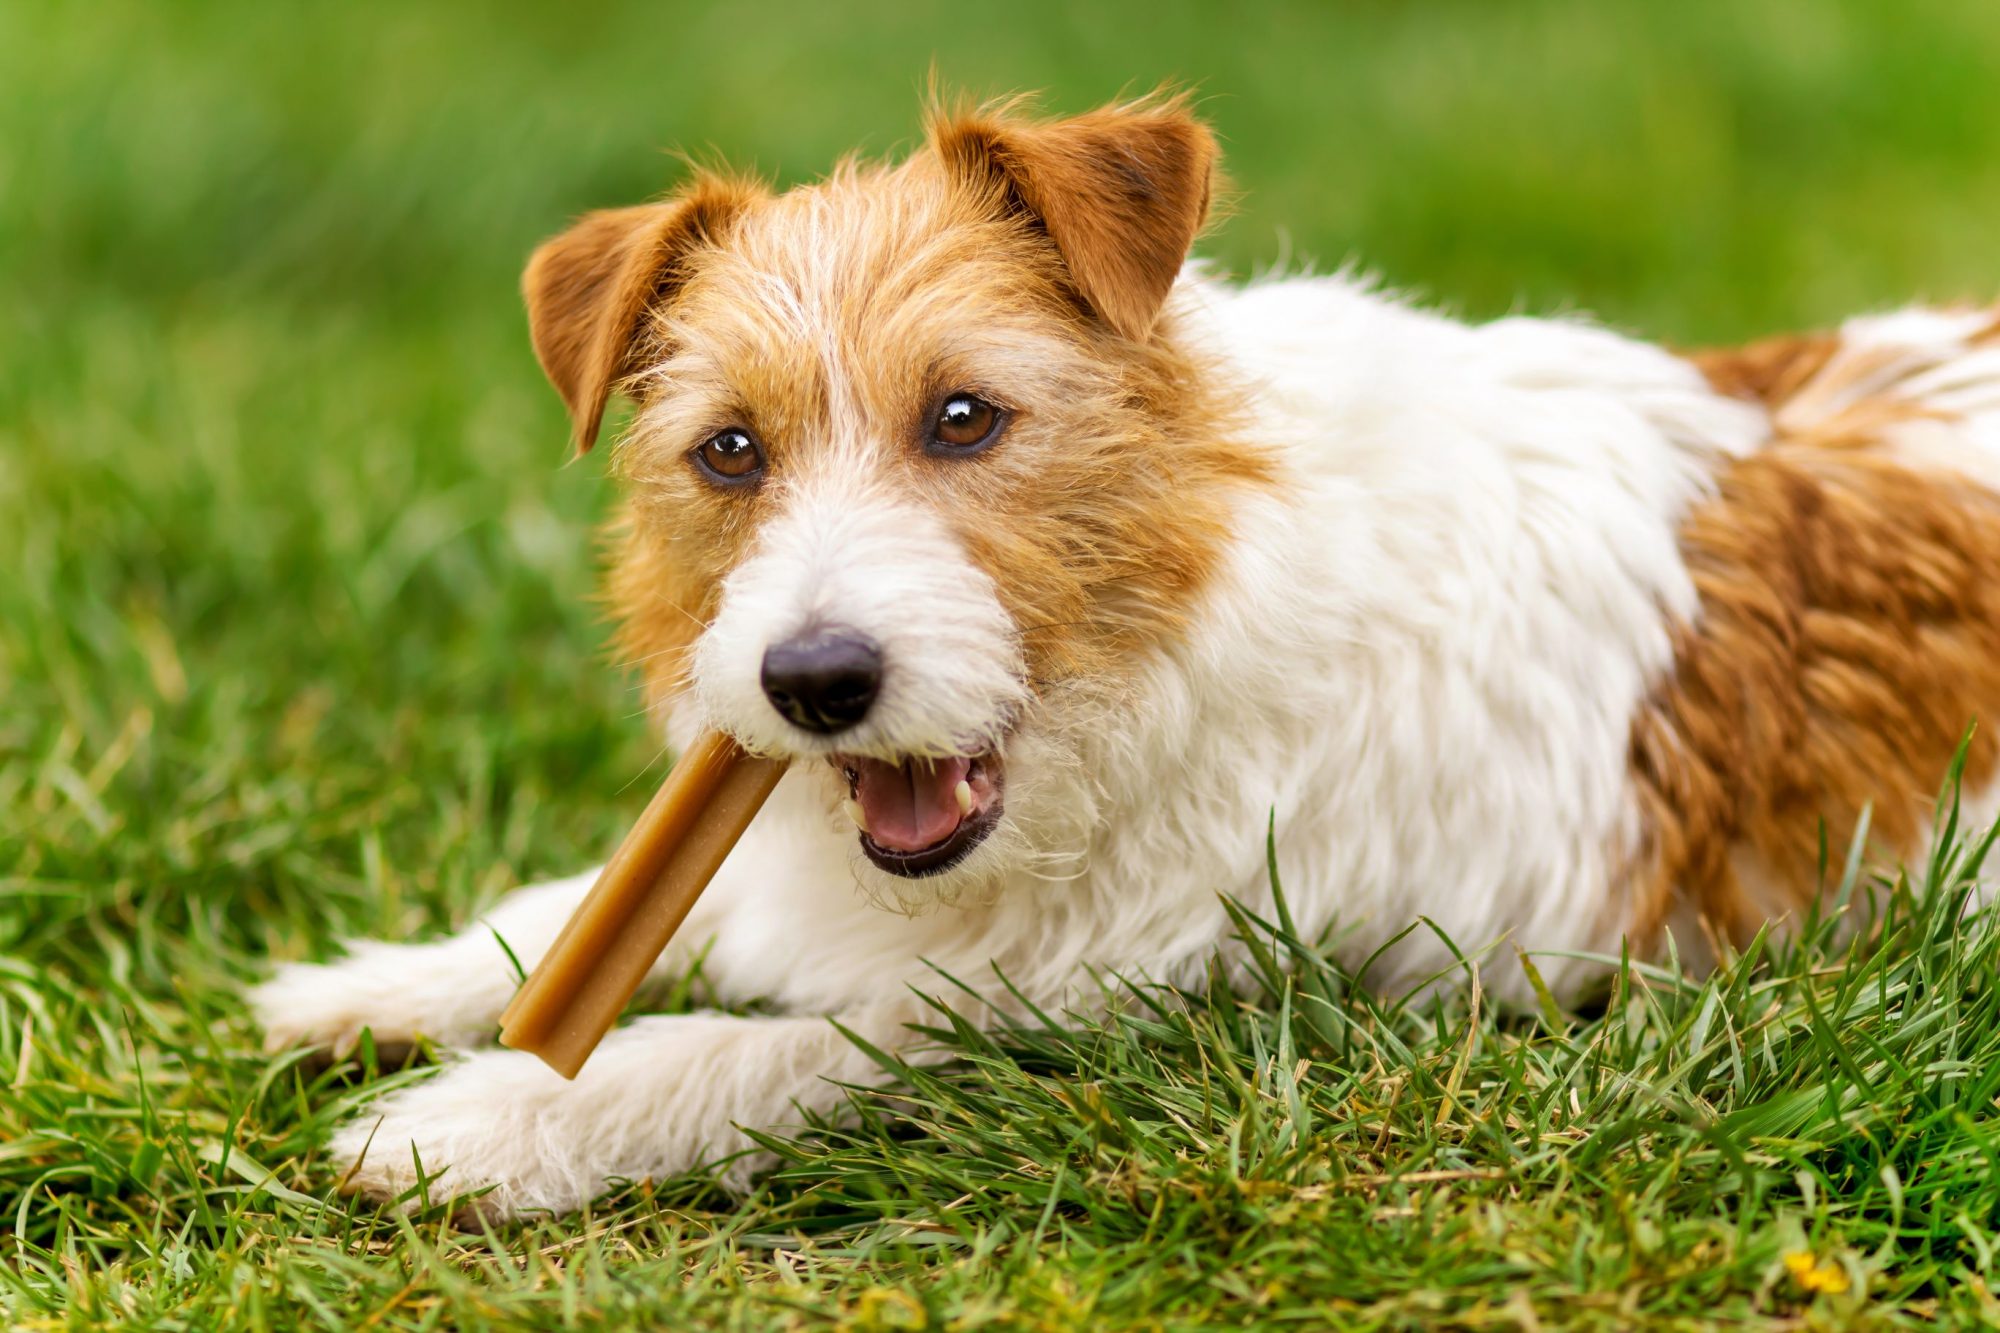 A dog with a dental chew.